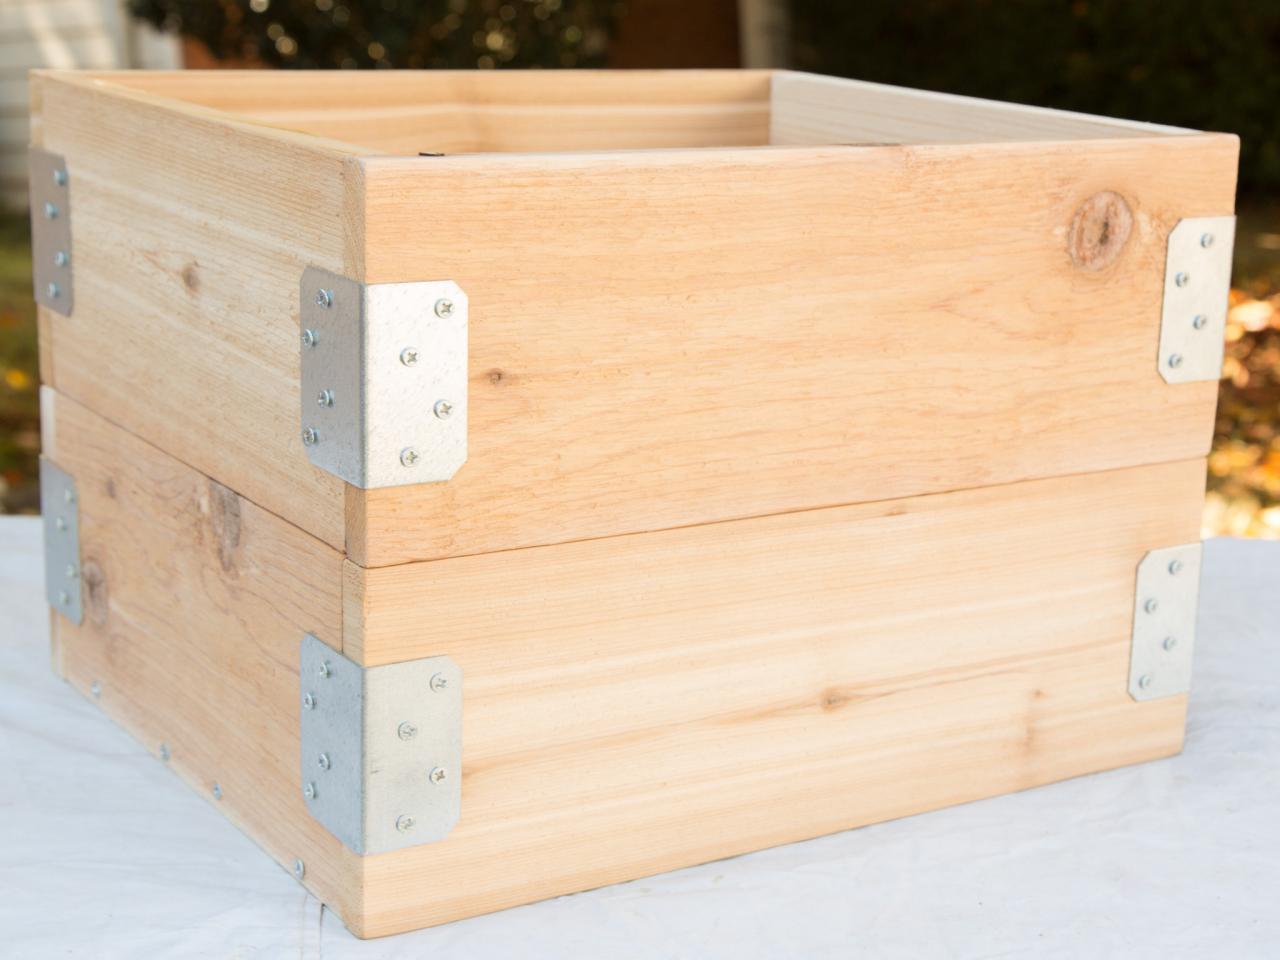 DIY Decorative Wooden Crate